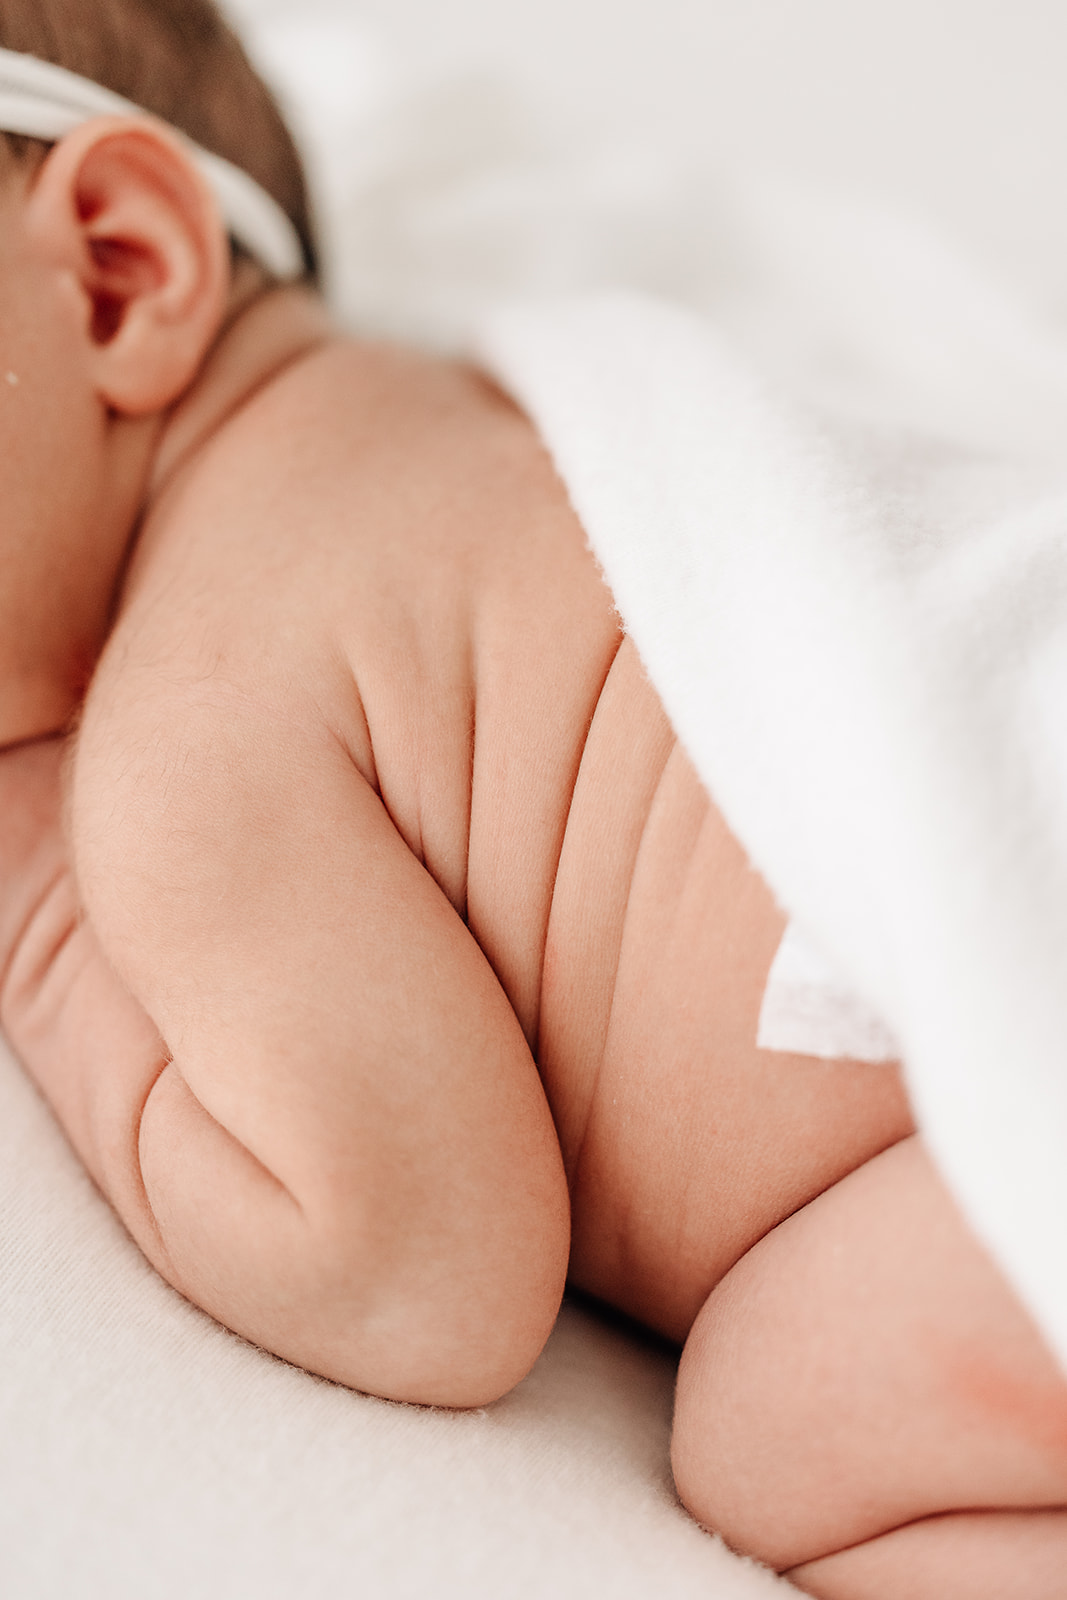 Details of a sleeping newborn baby's side rolls